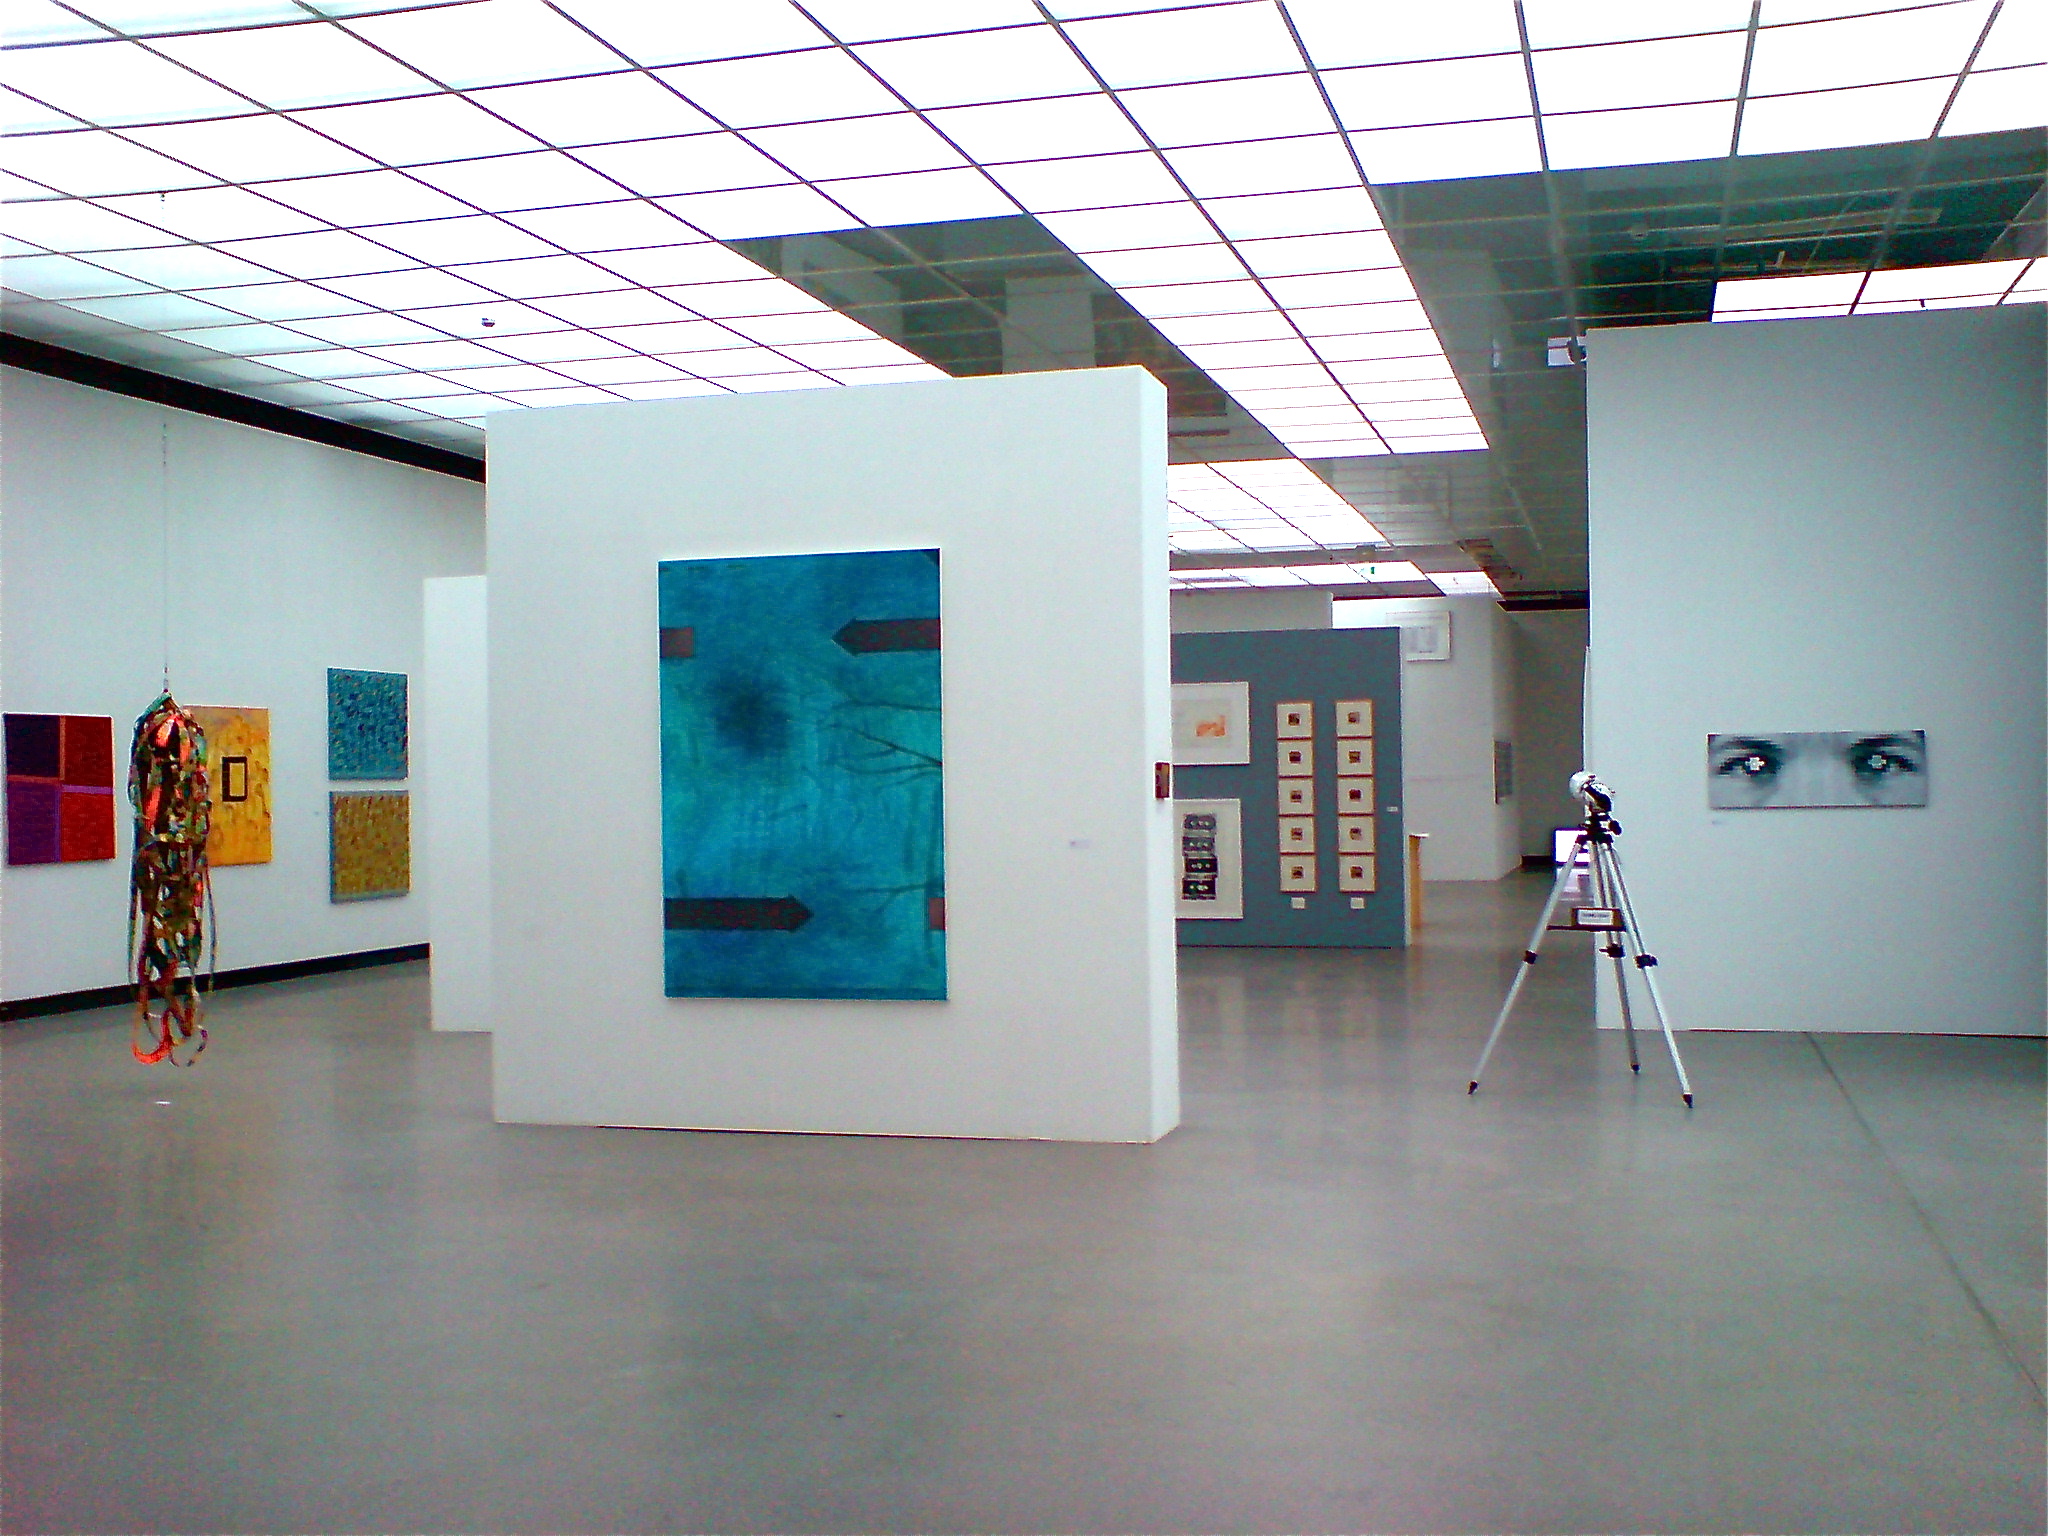 red pool, "Endlosschleife", Württembergischer Kunstverein, 2014, Erwin Holl